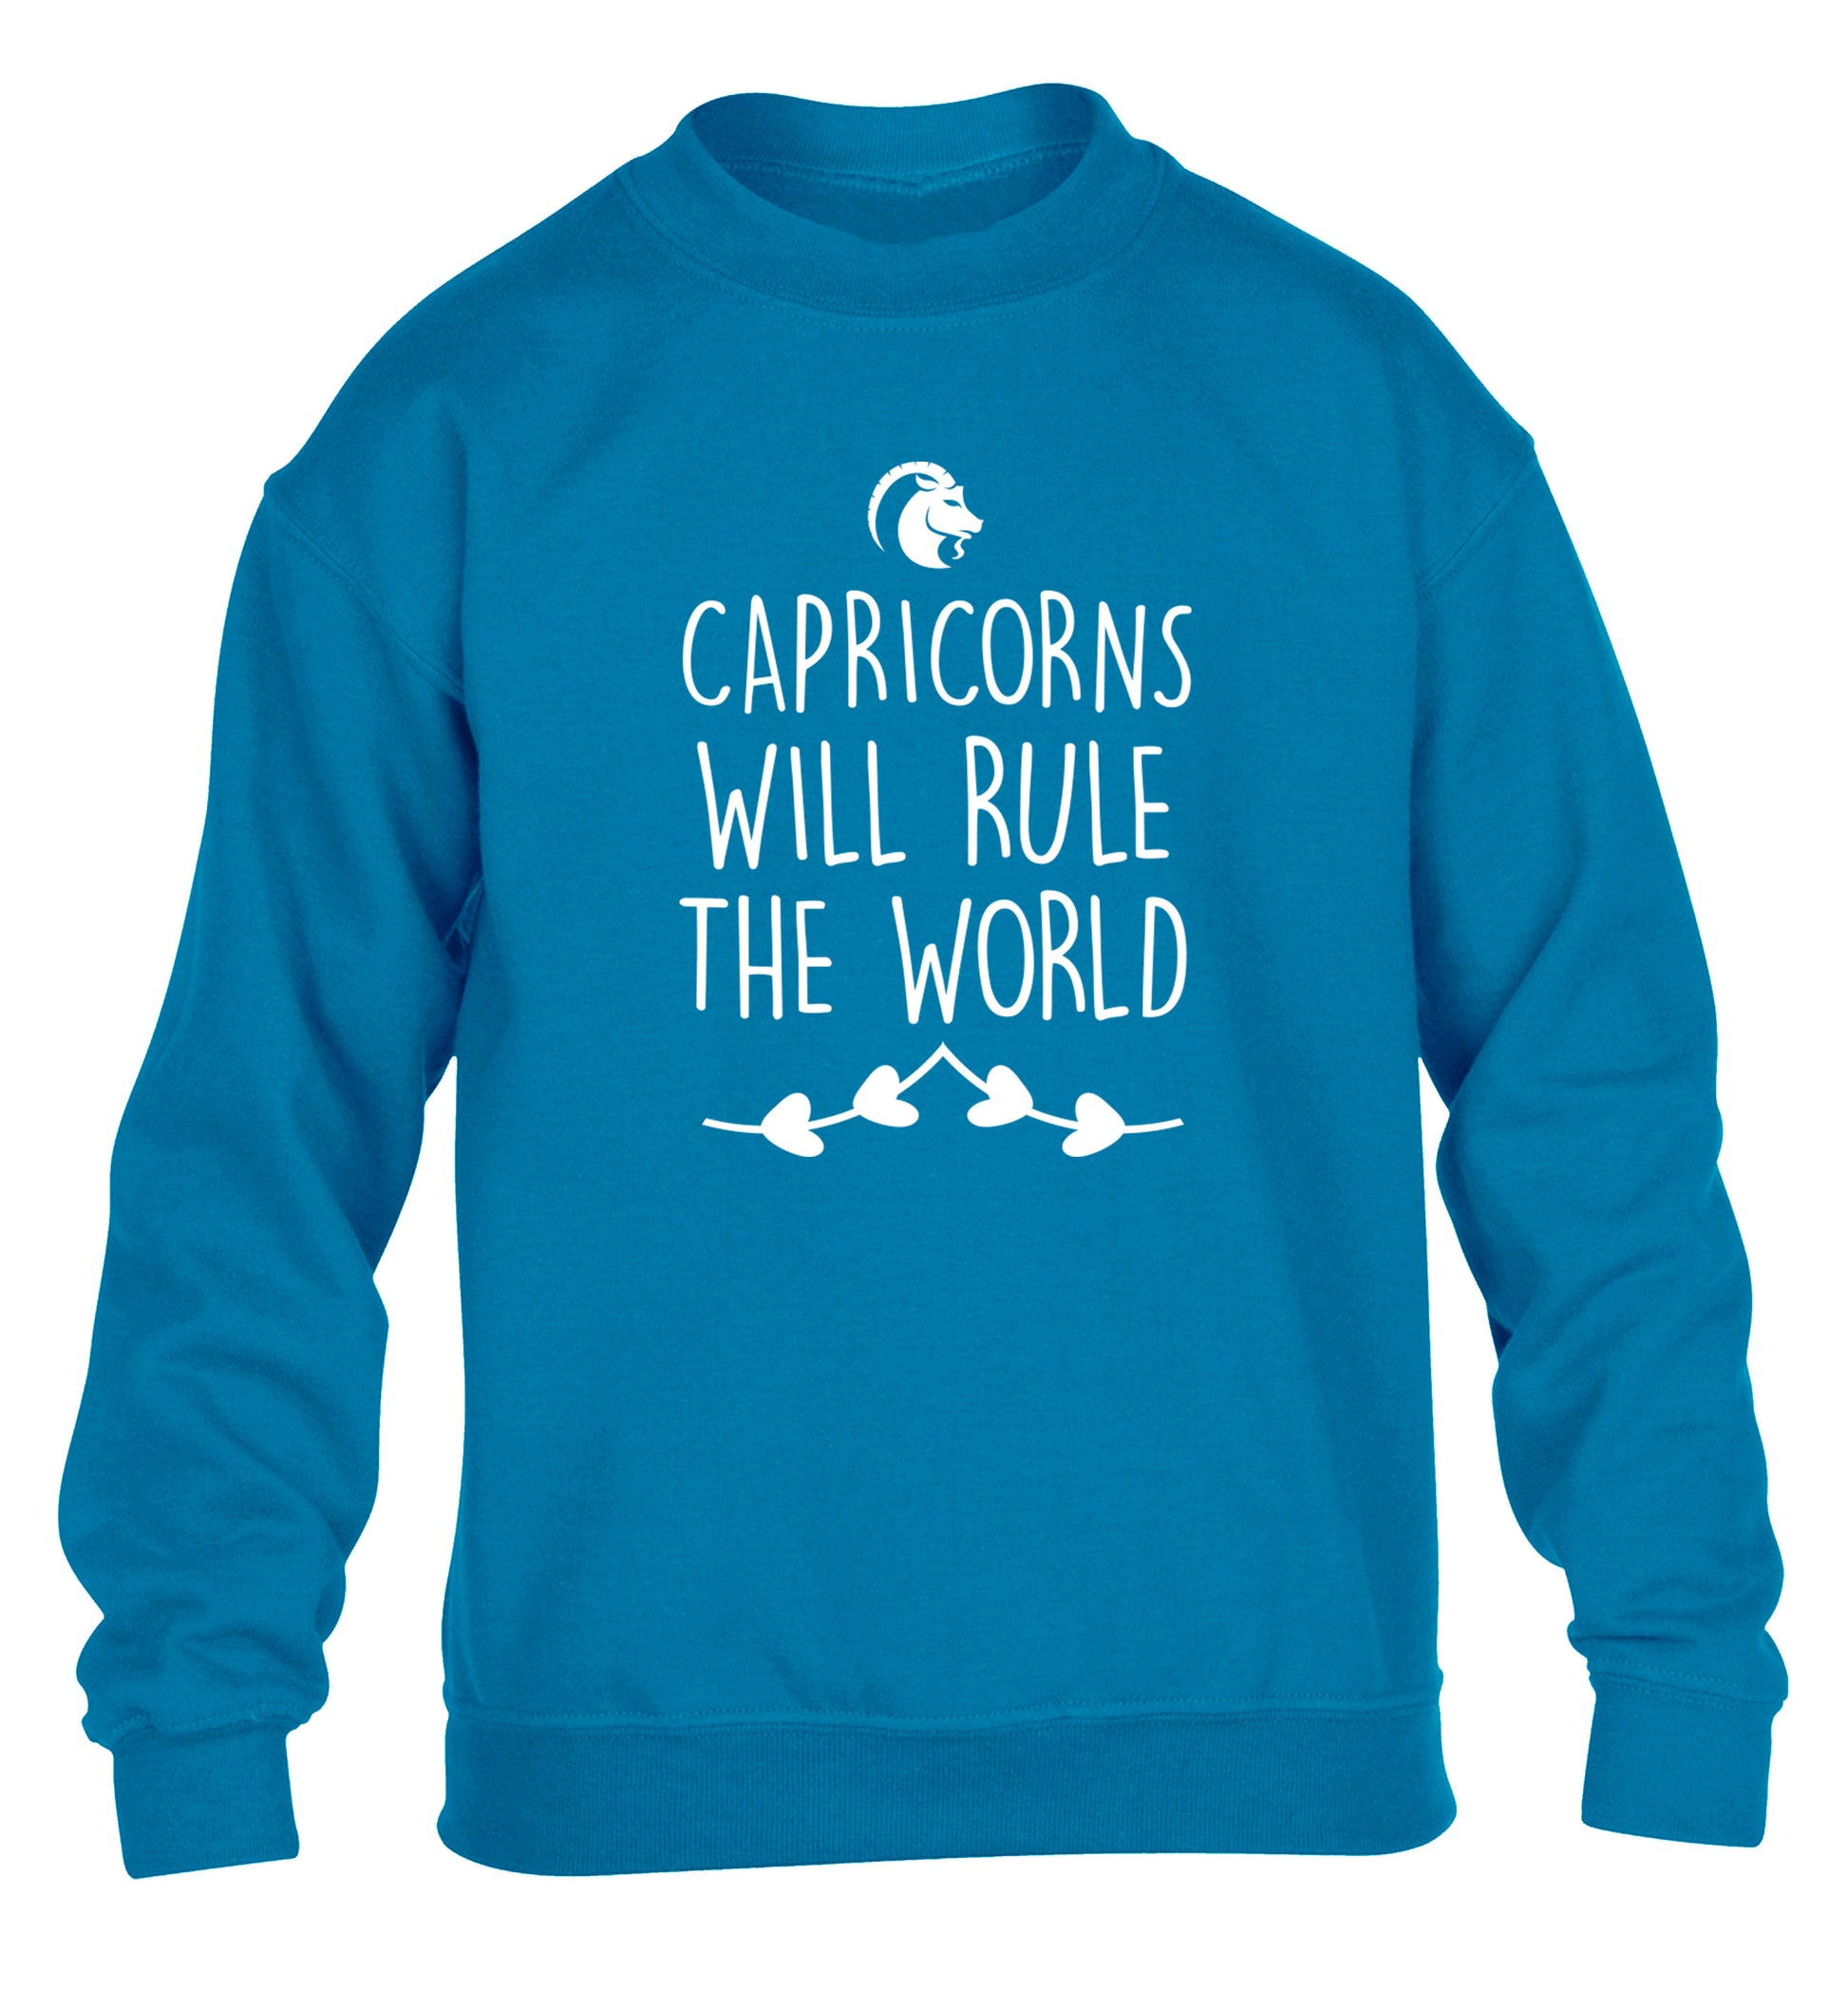 Capricorns will rule the world children's blue sweater 12-13 Years